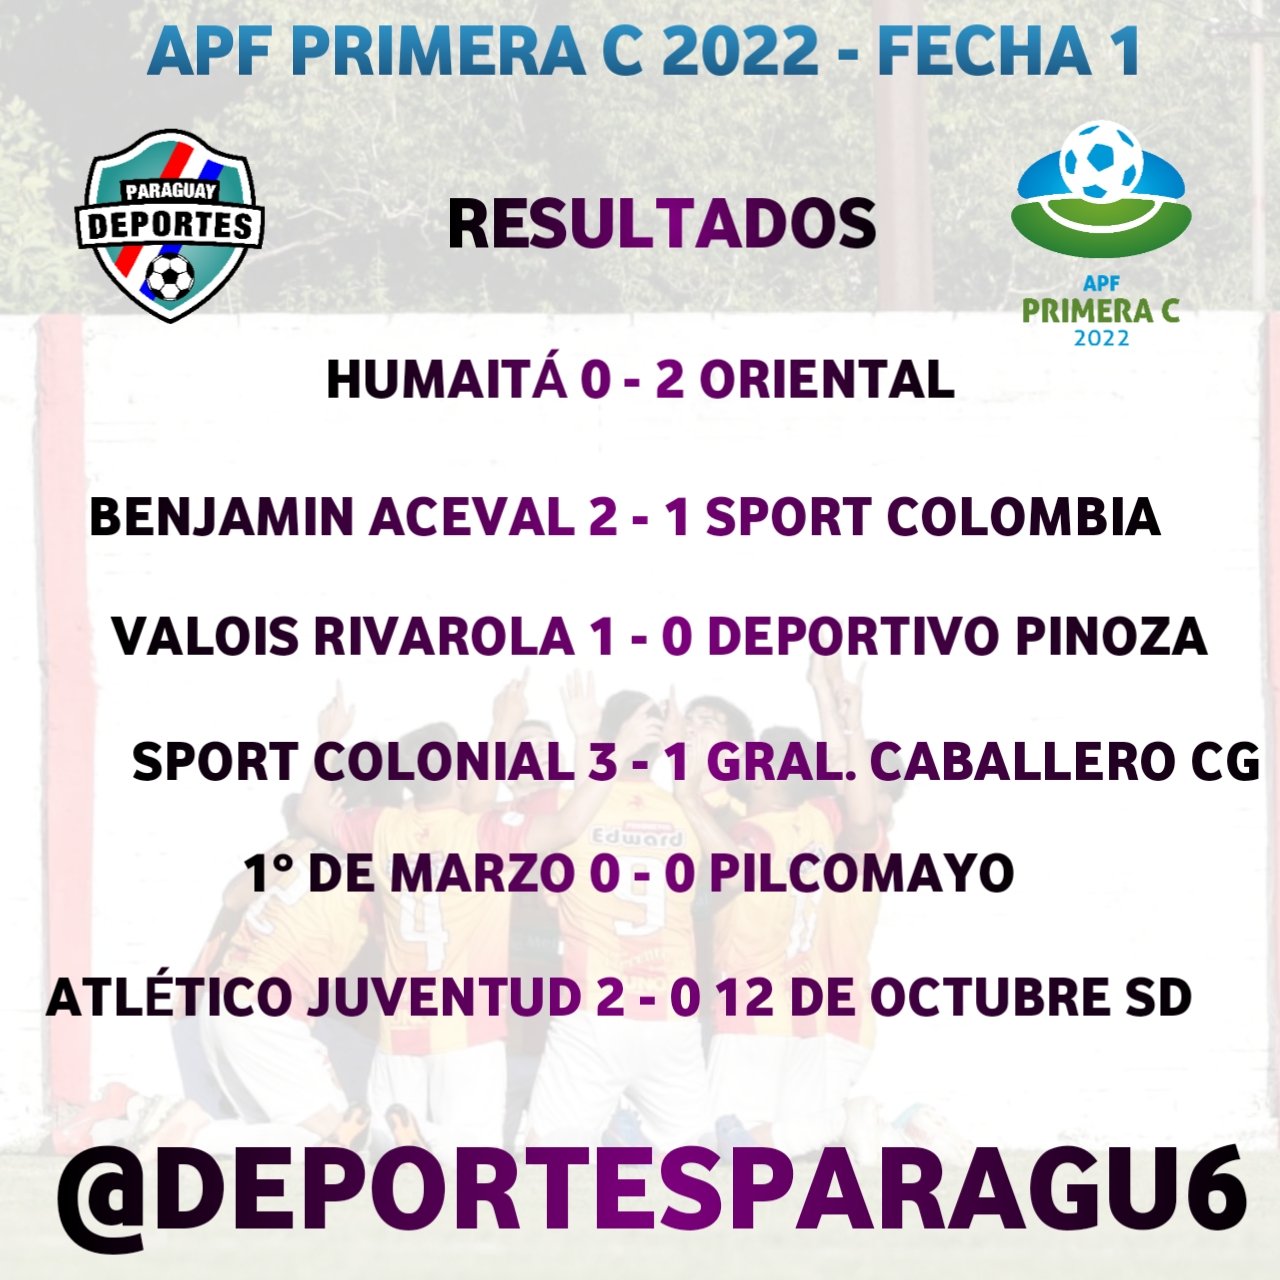 Deportes on Twitter: "APF PRIMERA C 2022 Resultados Finales @ClubJuventud_ @SportColonial https://t.co/kMR03a4vBN" / Twitter